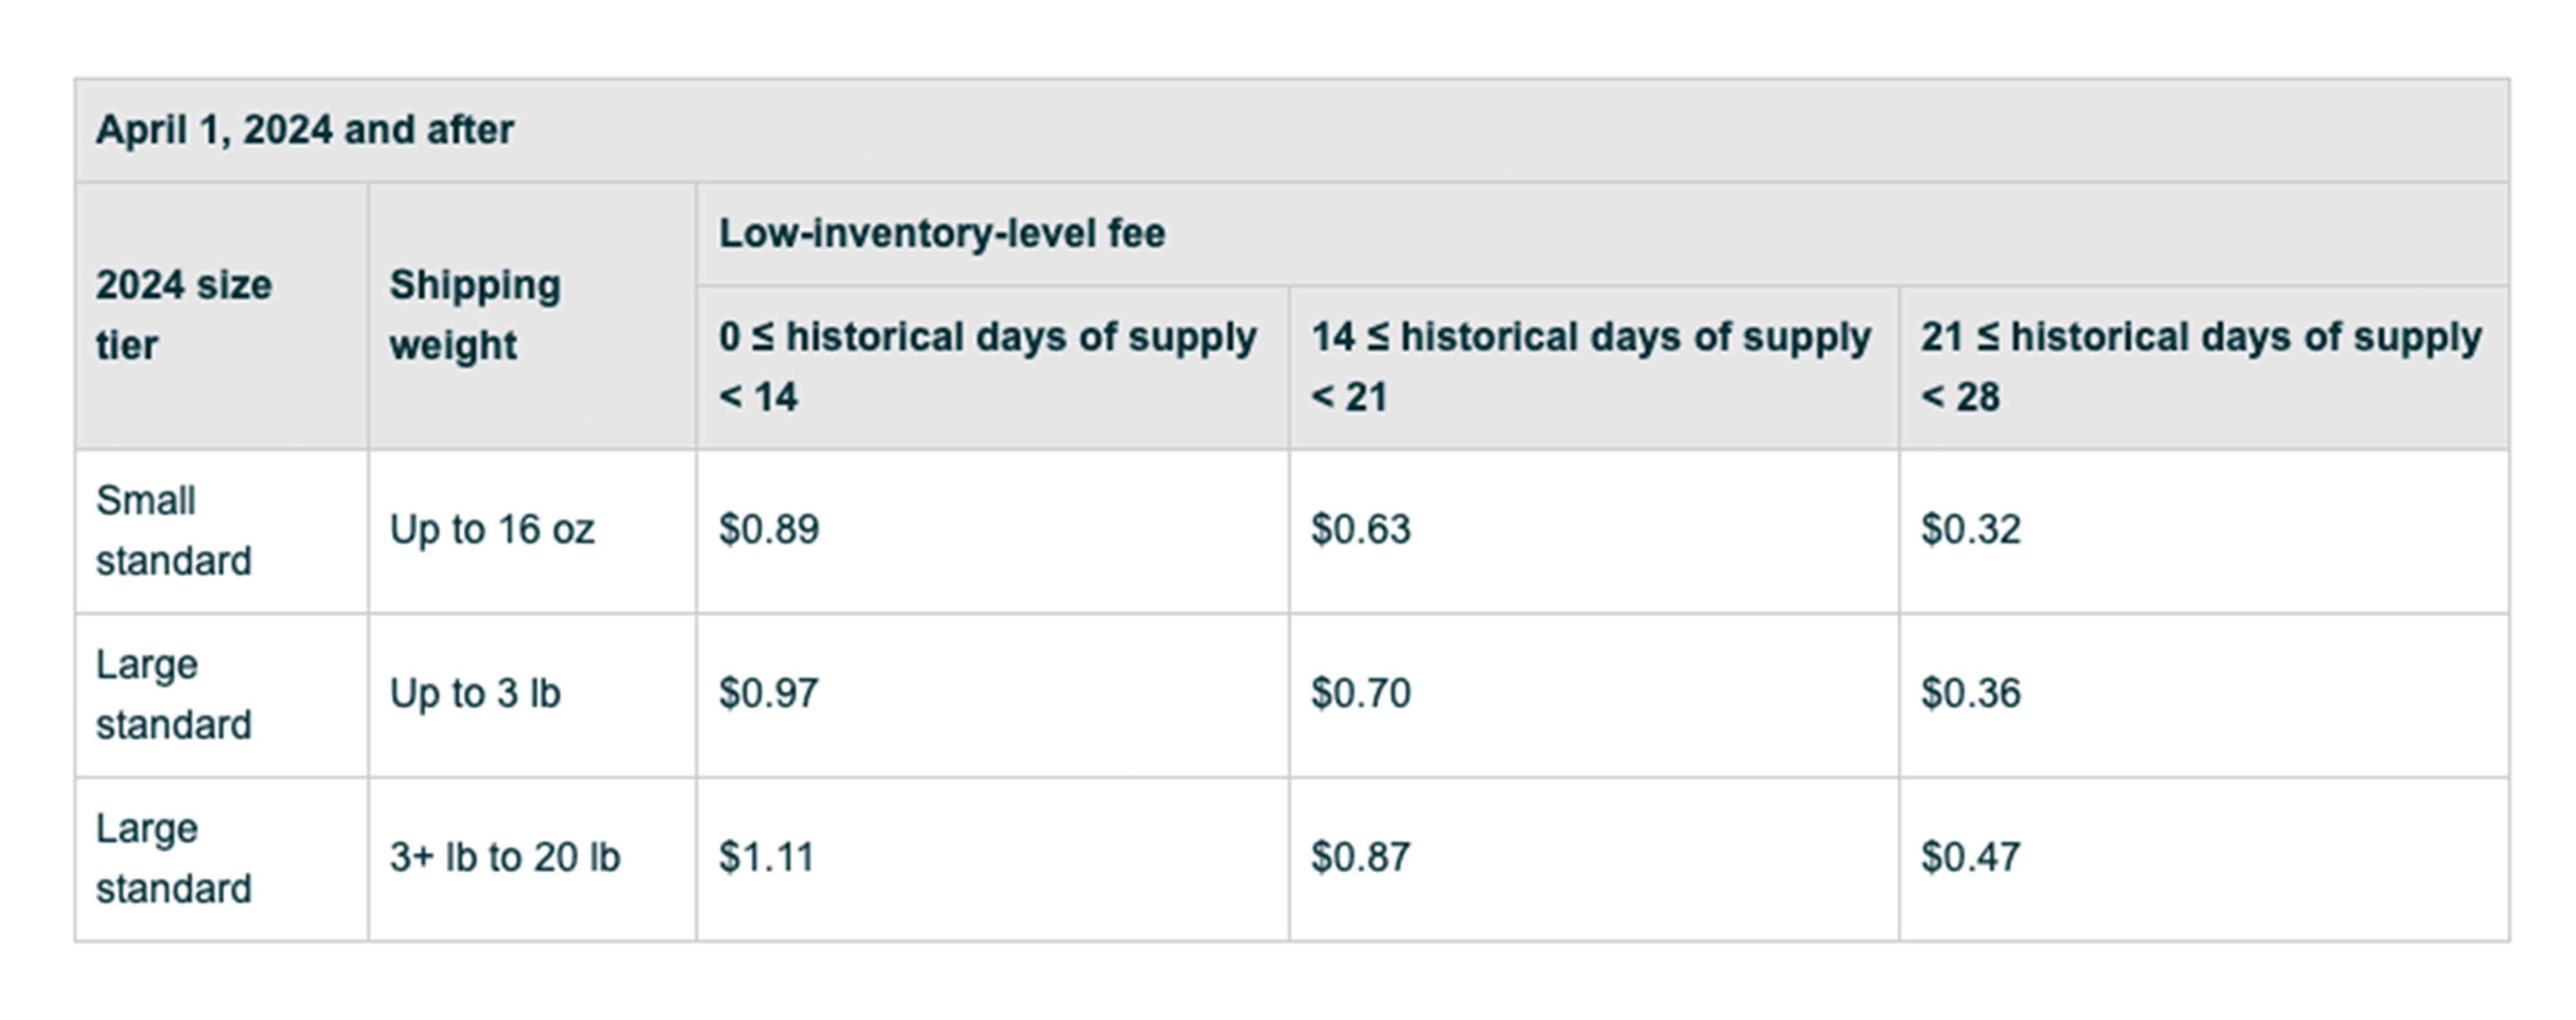 Amazon Low-Inventory Fee